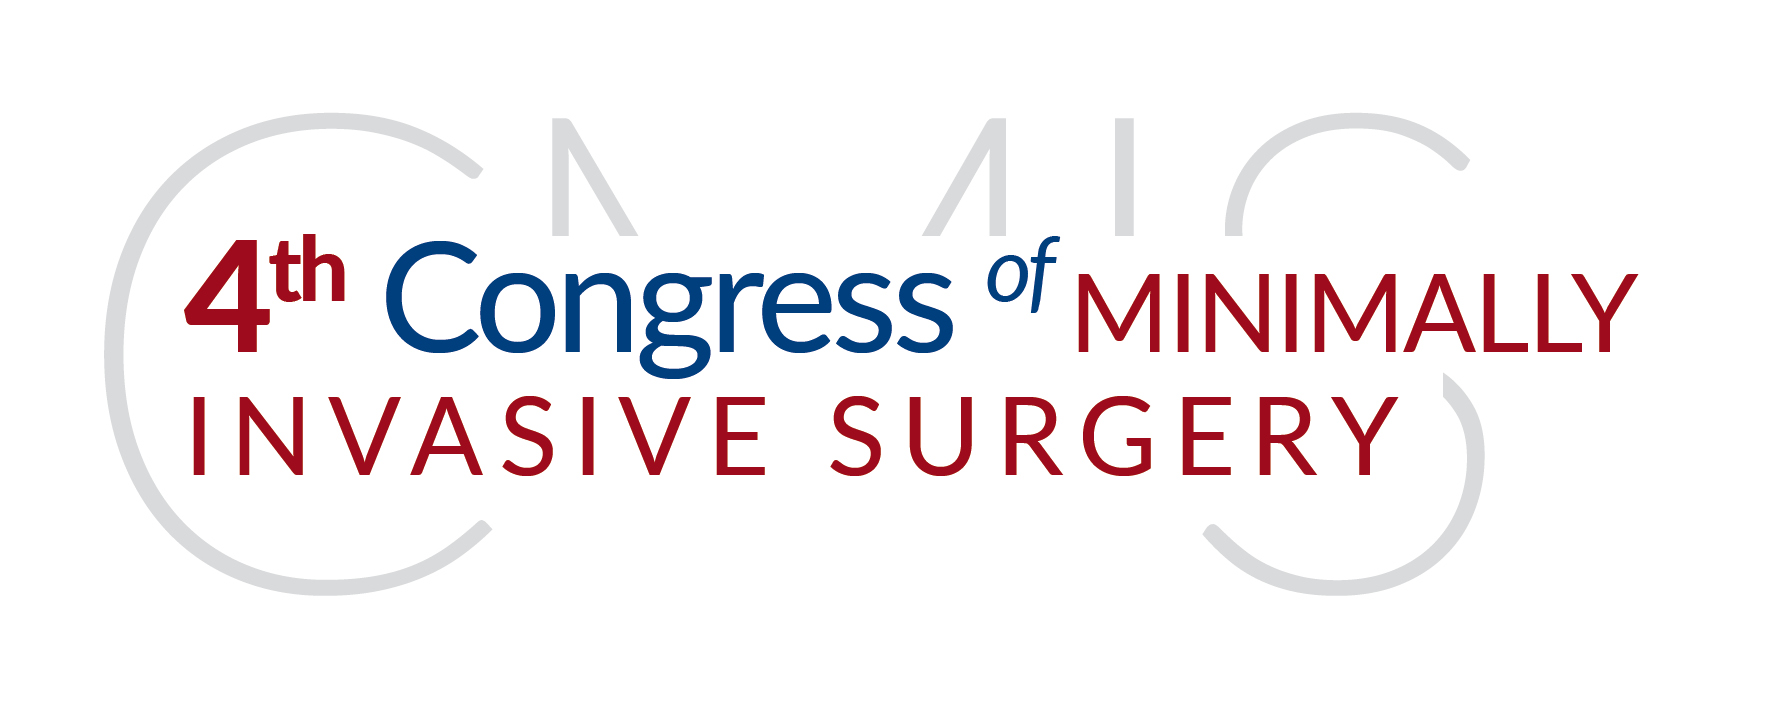 4th Congress of Minimally Invasive Surgery 